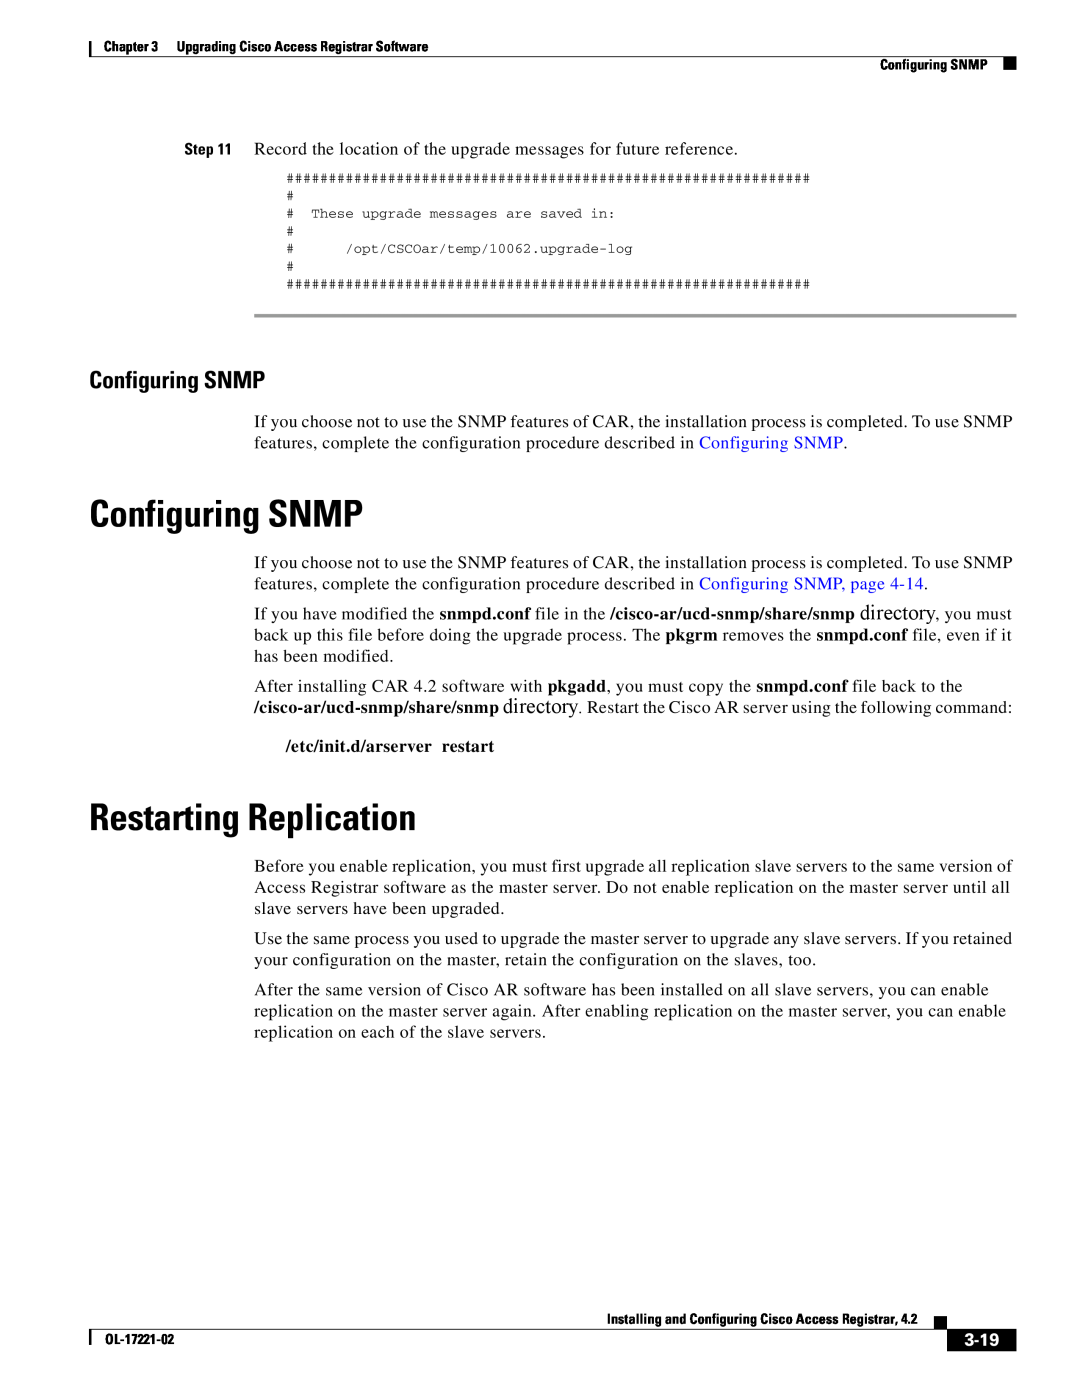 Cisco Systems 4.2 manual Configuring SNMP, Restarting Replication, 3-19, etc/init.d/arserver restart 